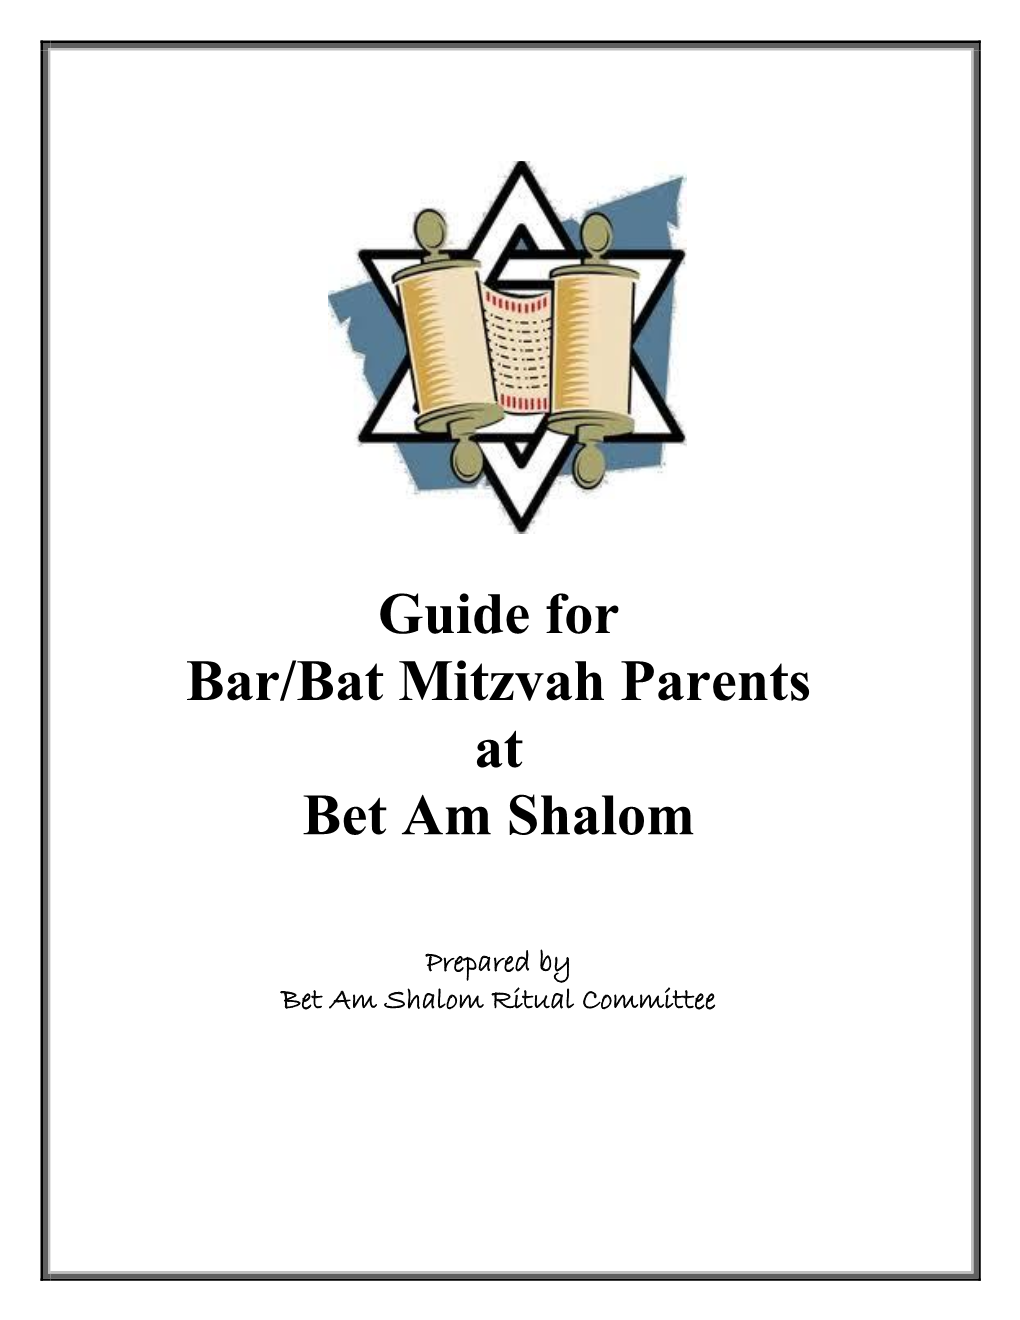 Guide for Bar/Bat Mitzvah Parents at Bet Am Shalom